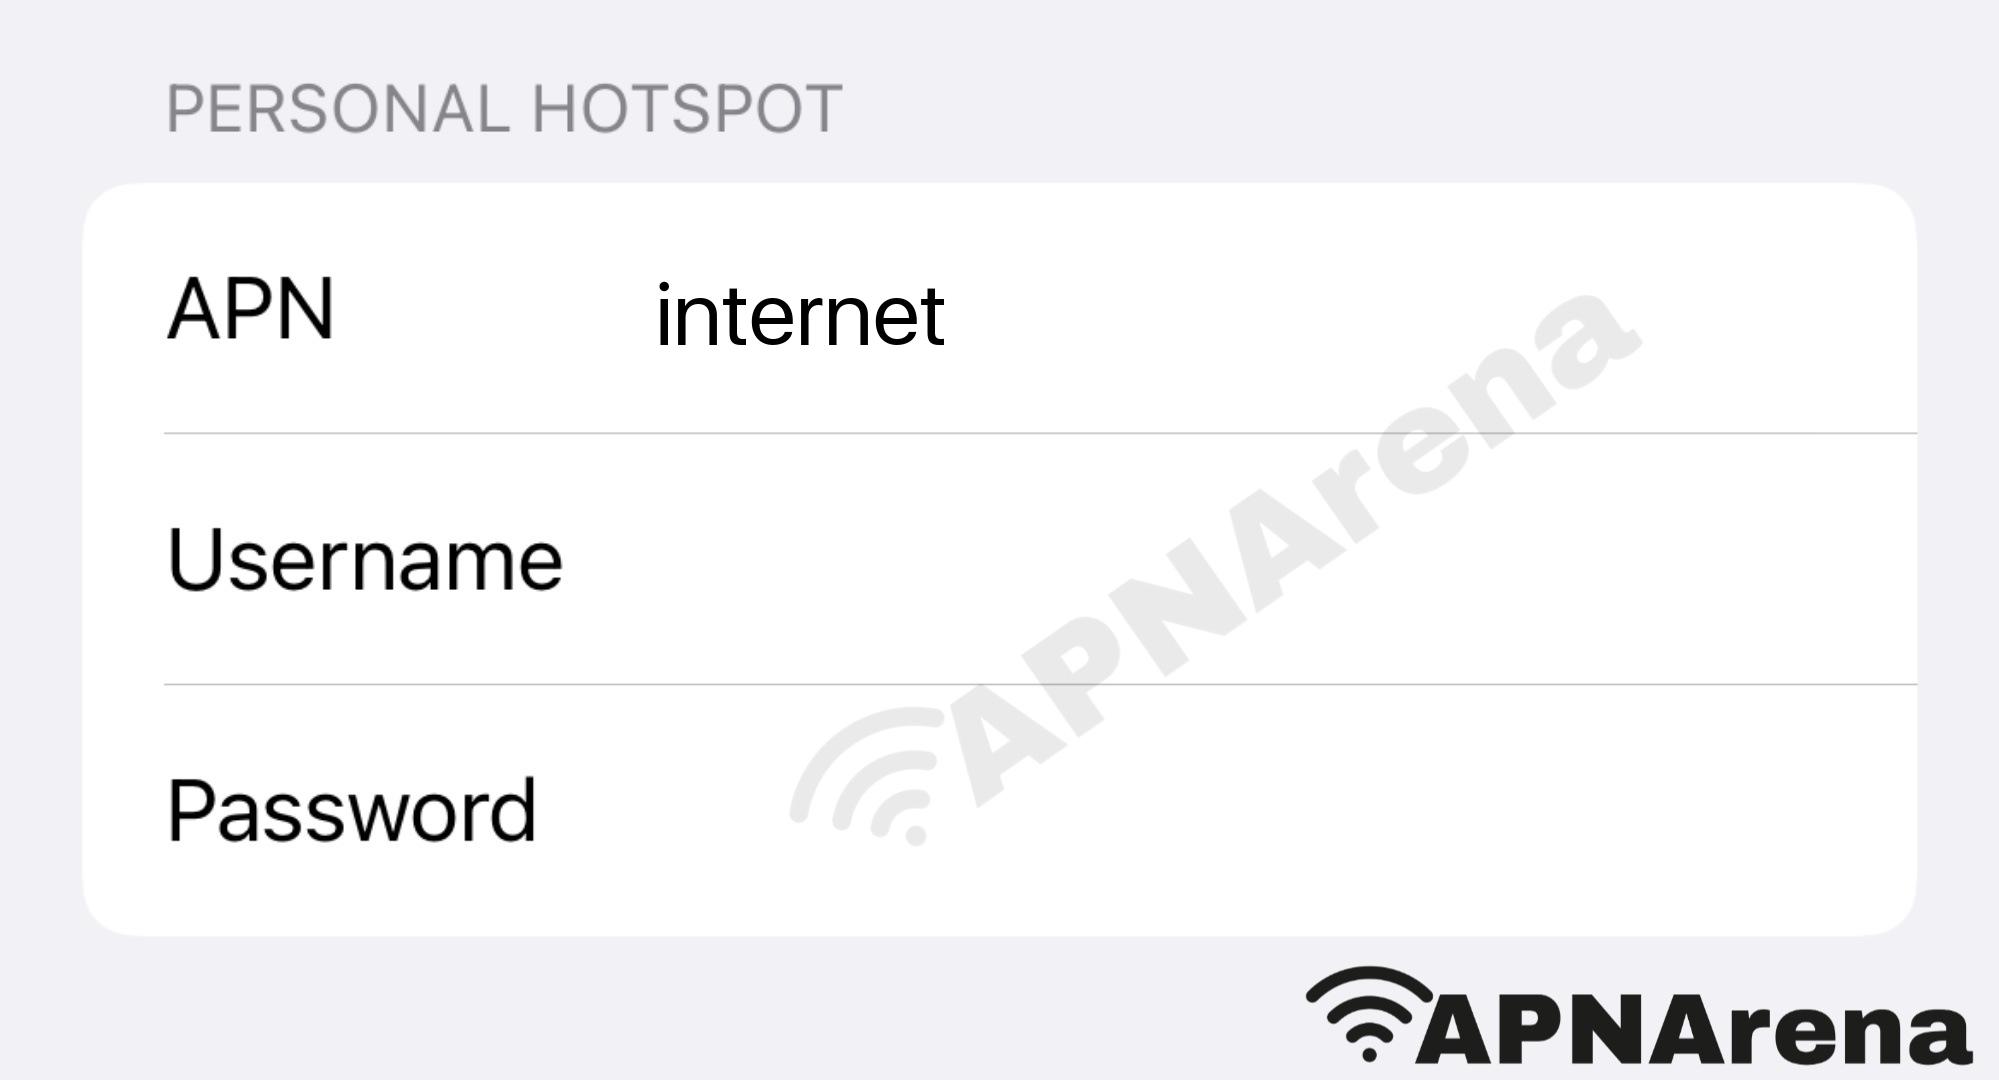 ASDA Mobile Personal Hotspot Settings for iPhone